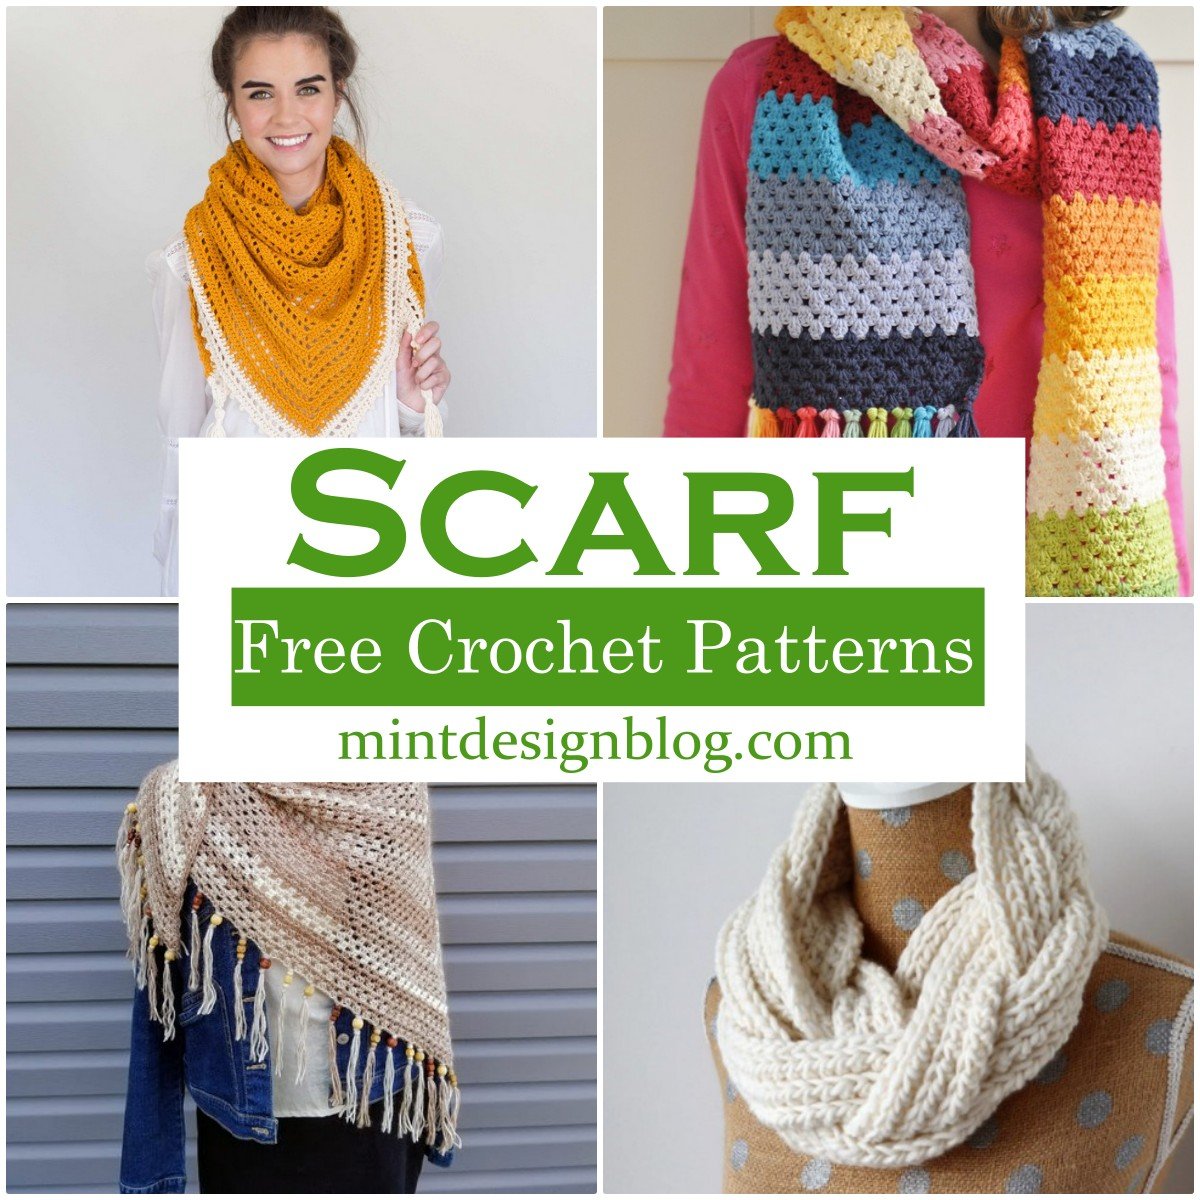 25 Free Crochet Scarf Patterns For beginners - Mint Design Blog